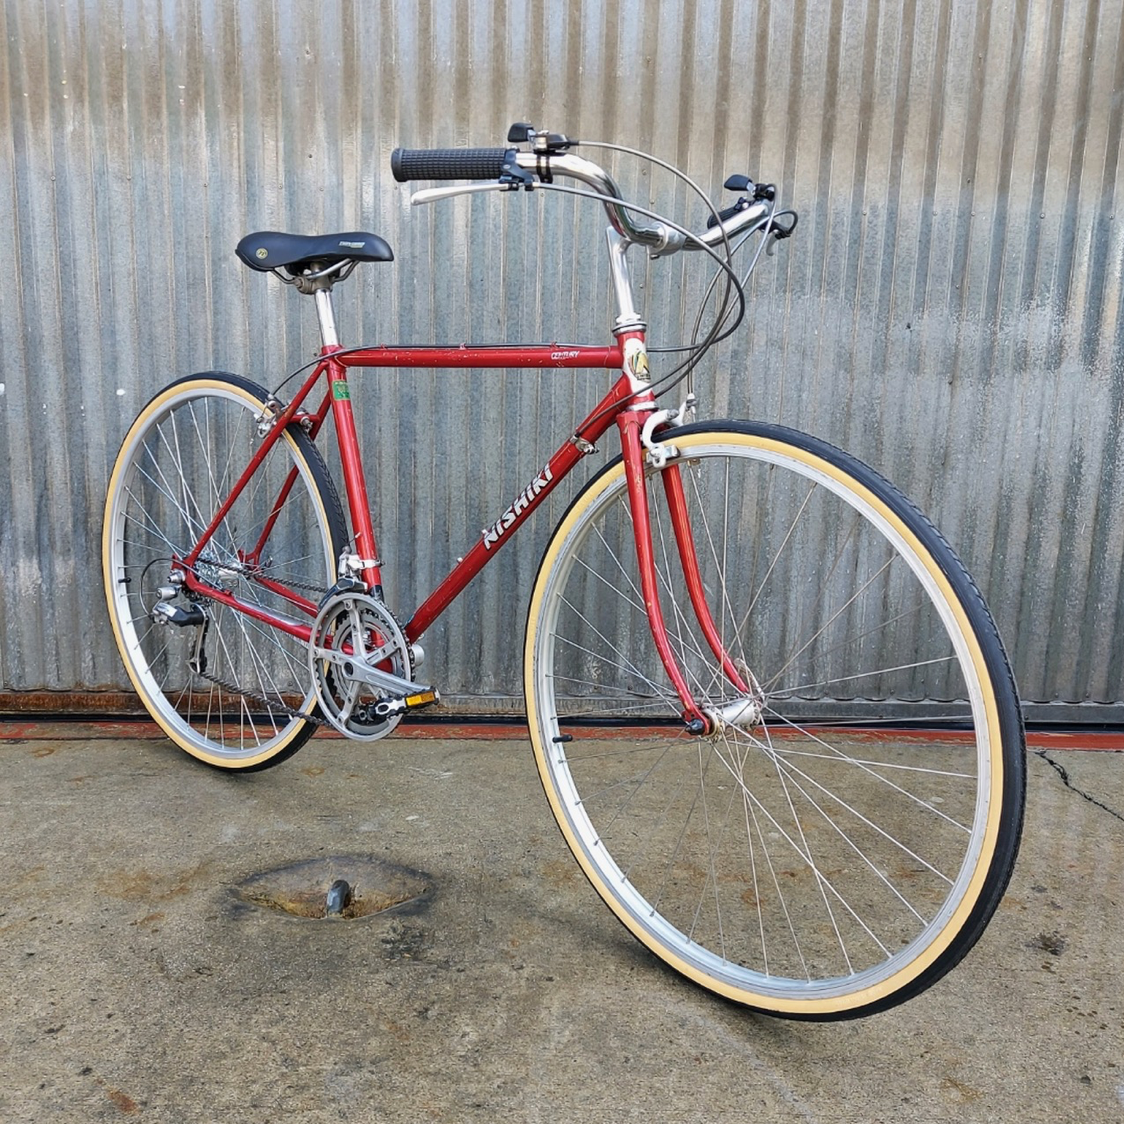 Vintage Nishiki Road Bike Converted to Baguette Slaying City Bike